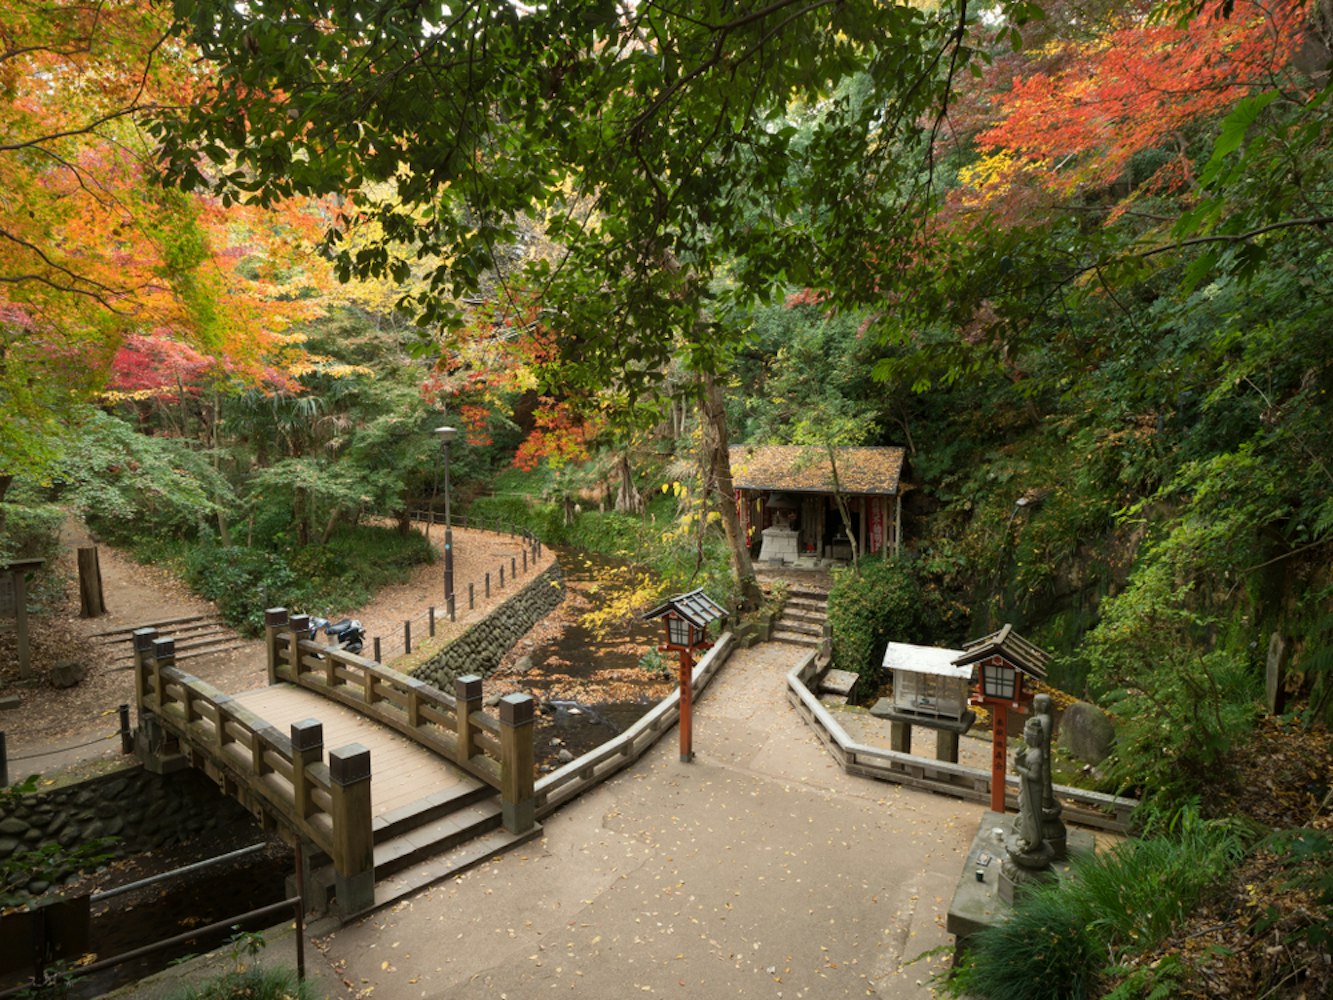 Autumn leaves of Todoroki Valley Park